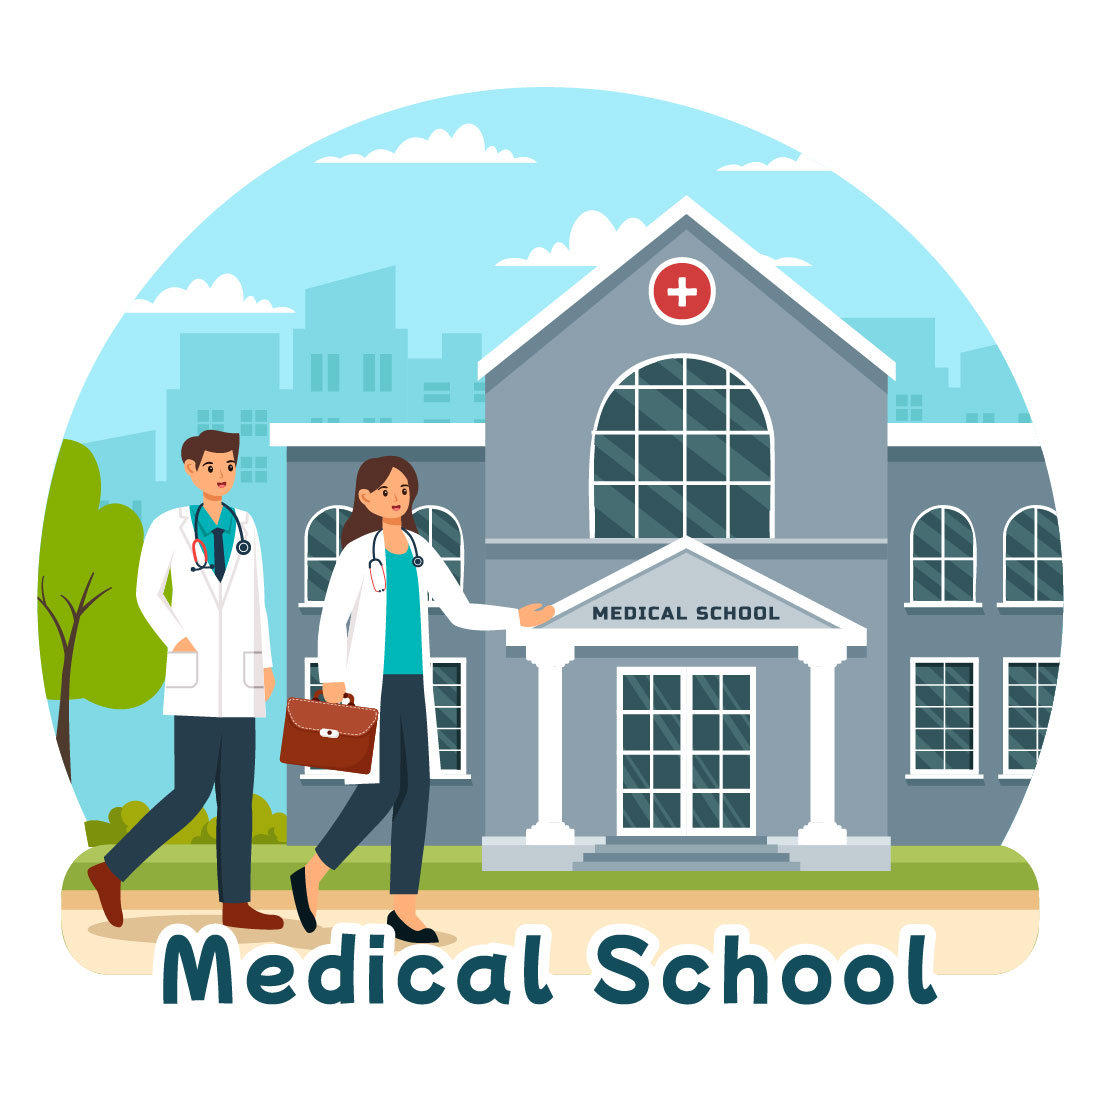 10 Medical School Illustration preview image.